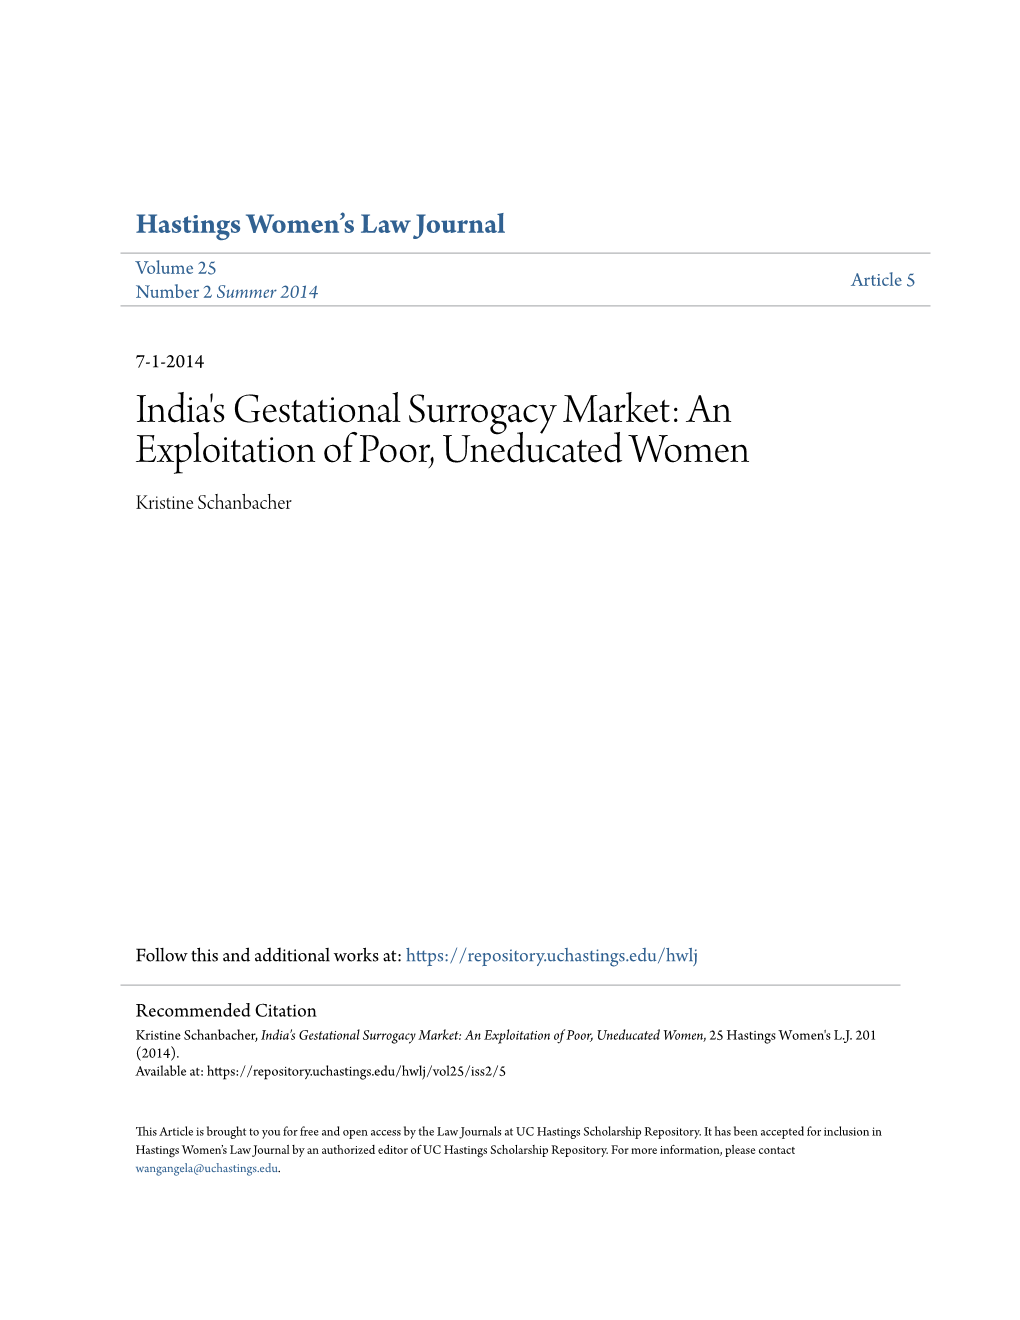 India's Gestational Surrogacy Market: an Exploitation of Poor, Uneducated Women Kristine Schanbacher